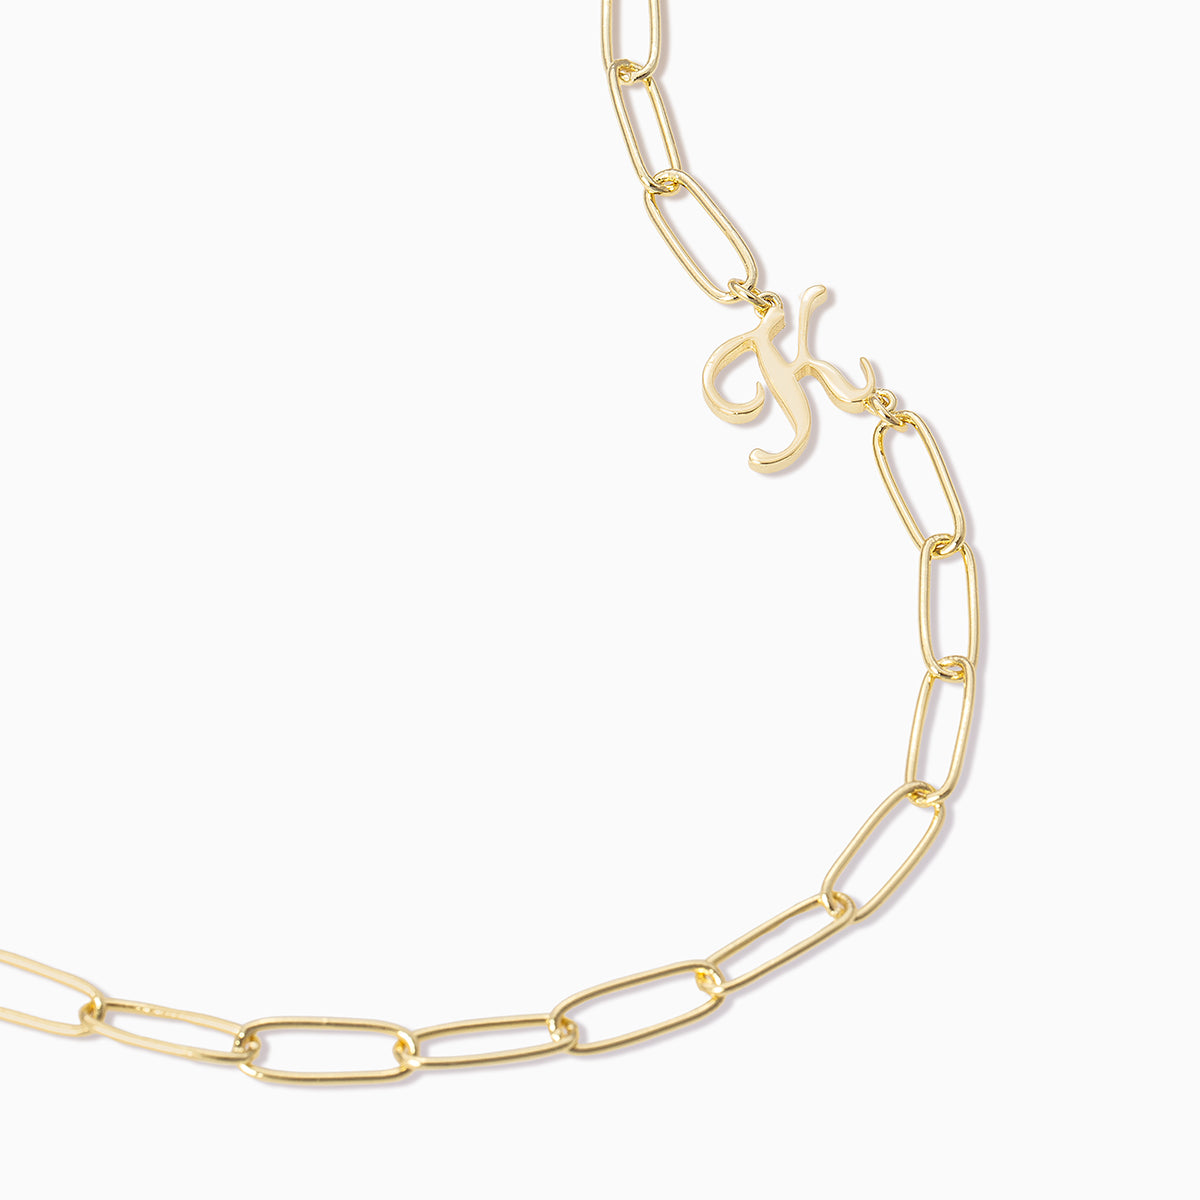 Cursive Initial Necklace | Gold | Product Detail Image | Uncommon James